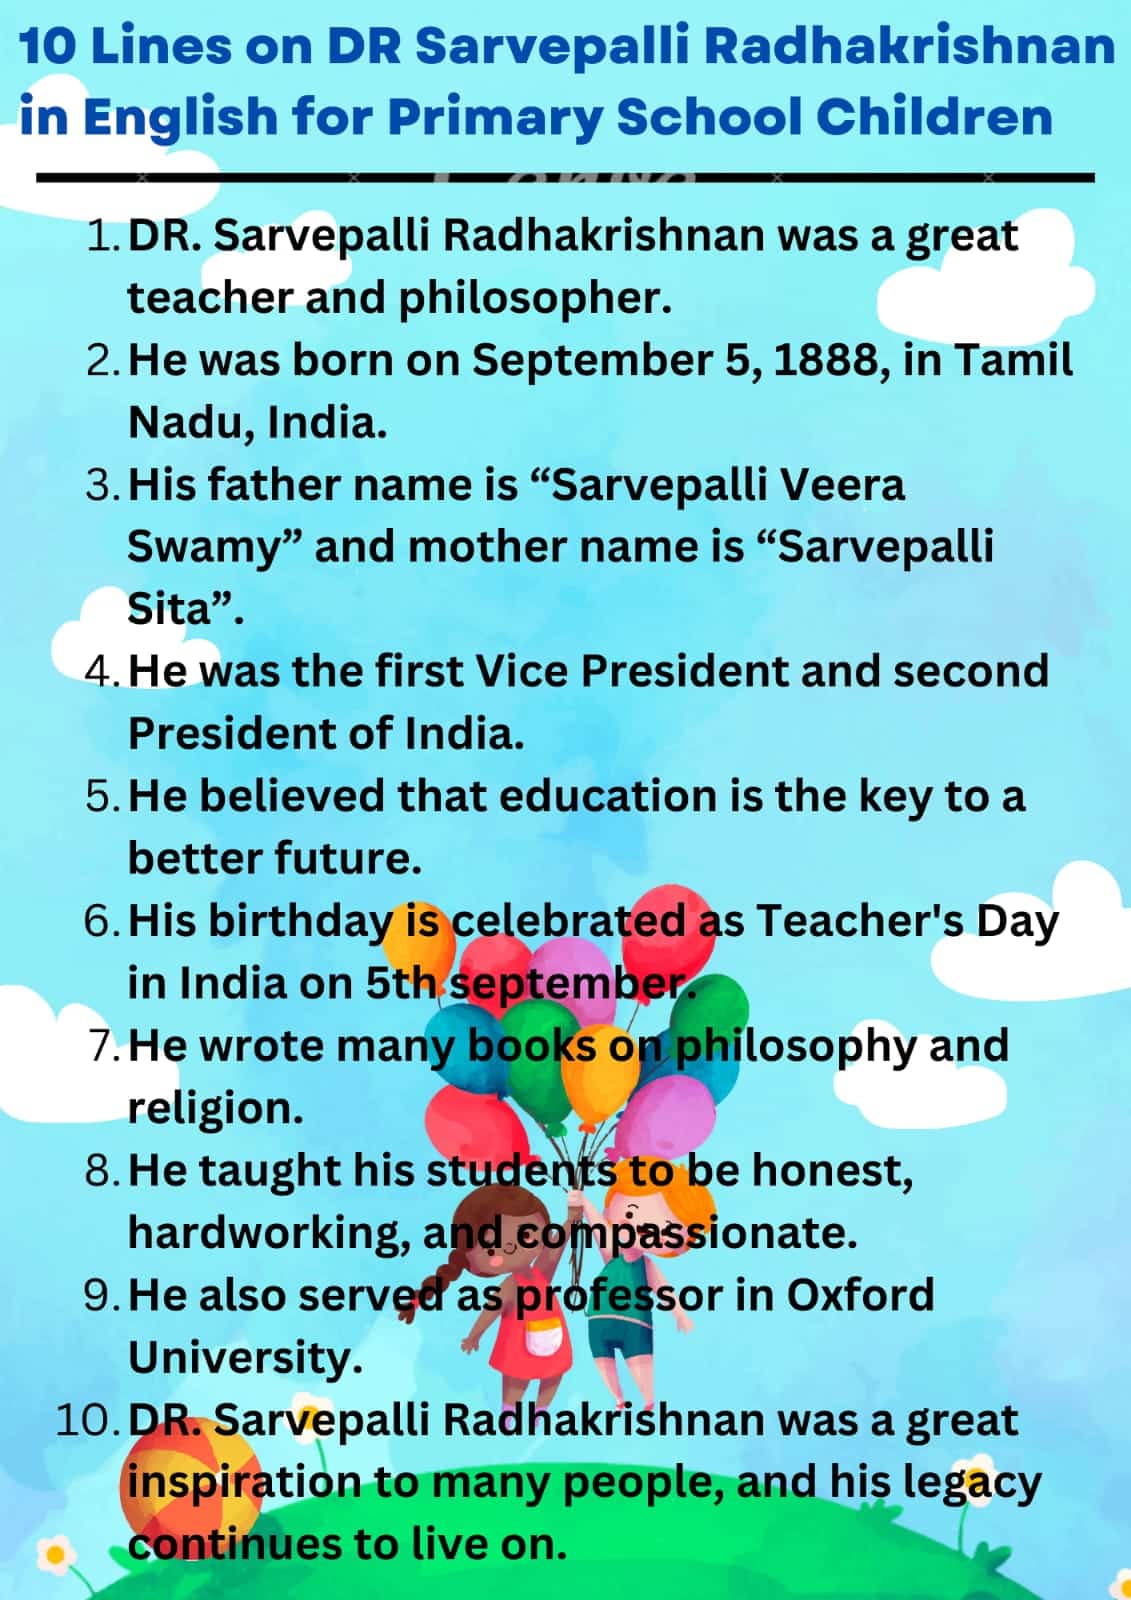 10 Lines on DR Sarvepalli Radhakrishnan in English for Primary School Children